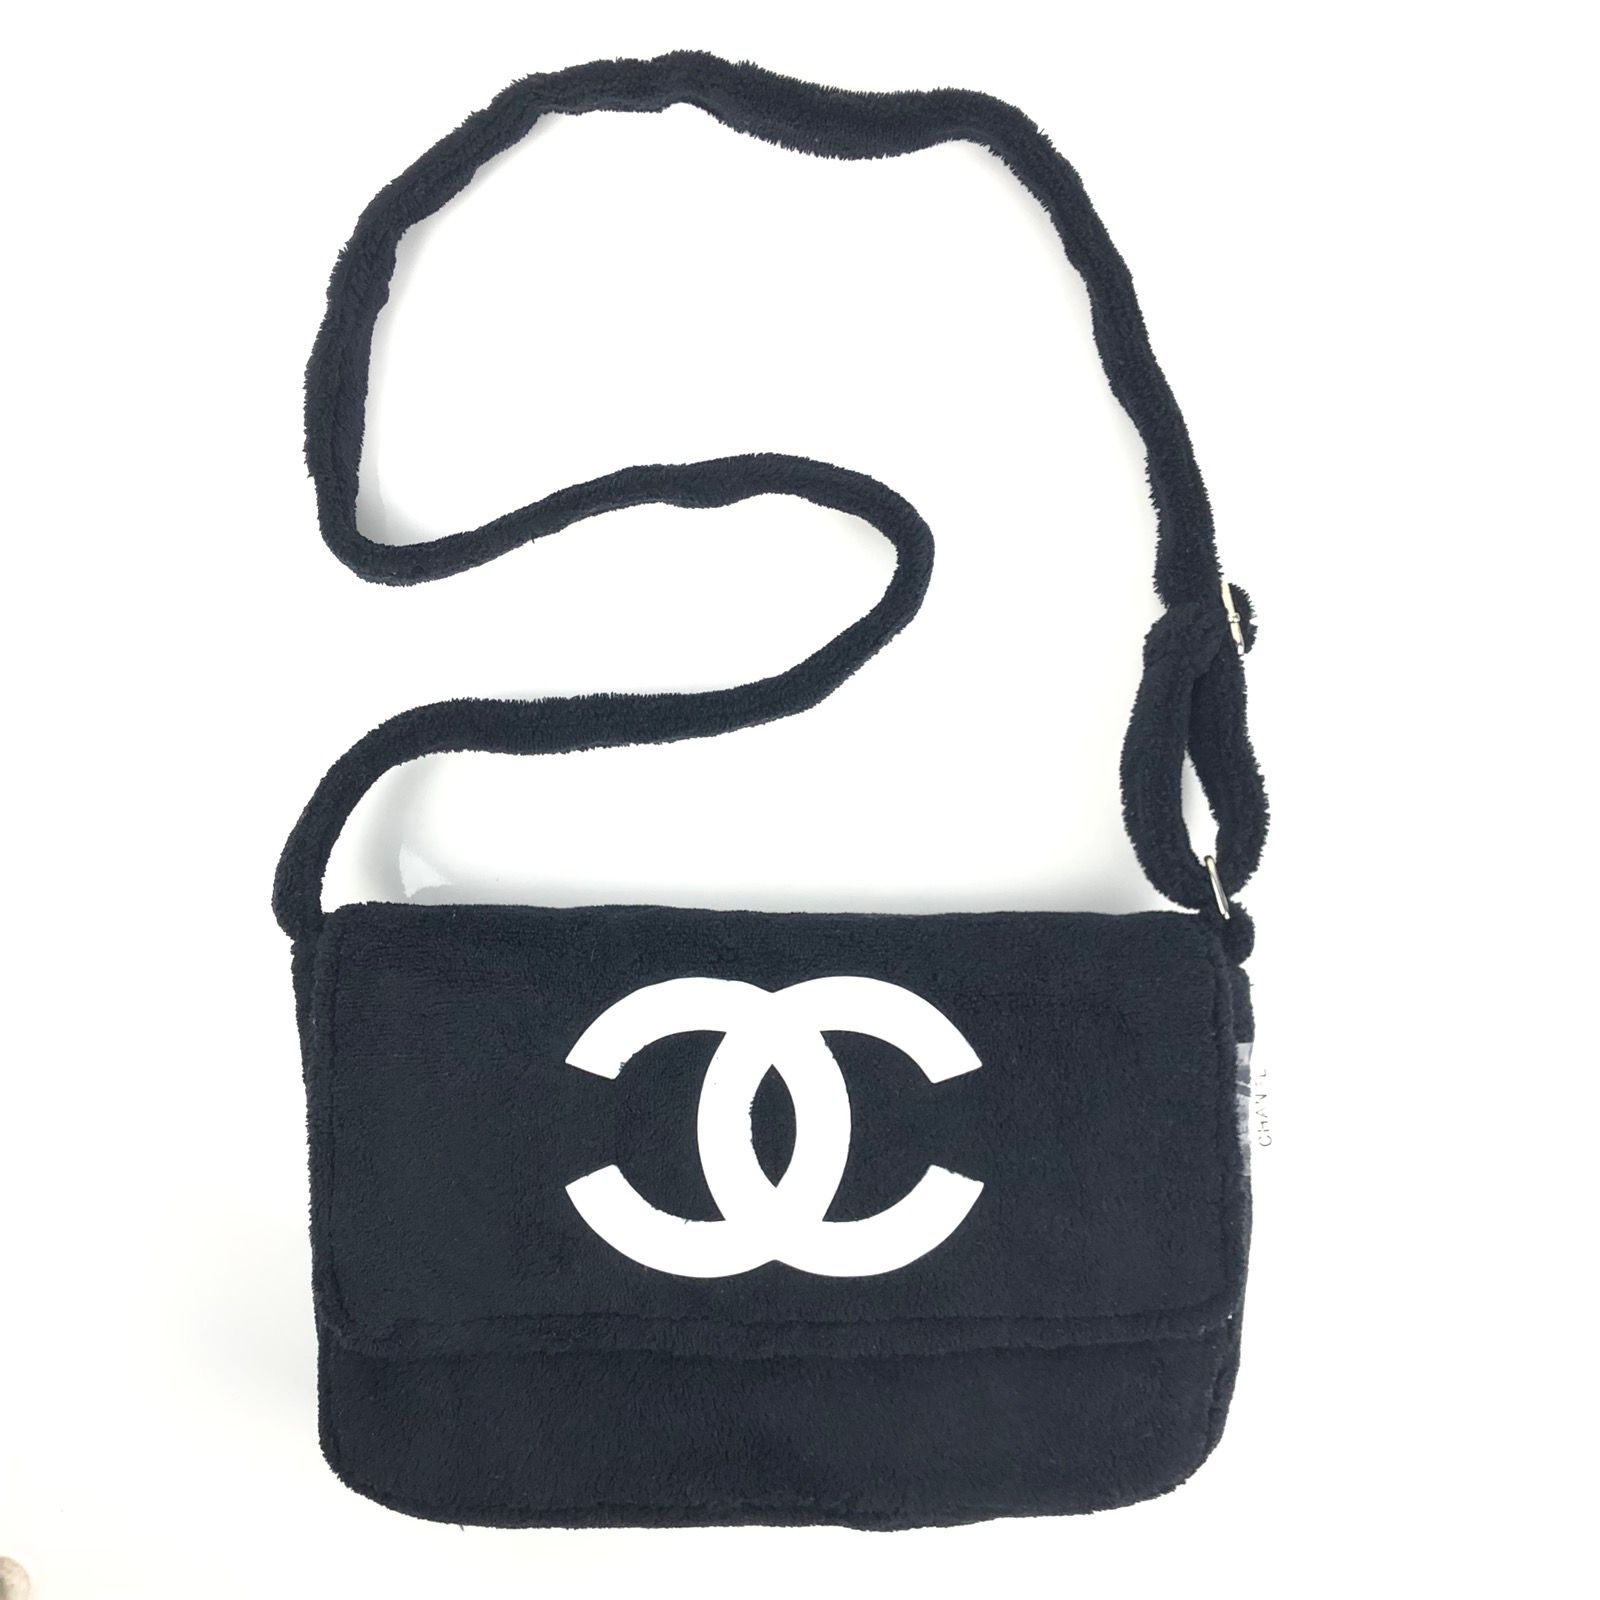 Chanel CHANEL PRECISION BEAUTE VIP CROSSBODY SHOULDER BAG